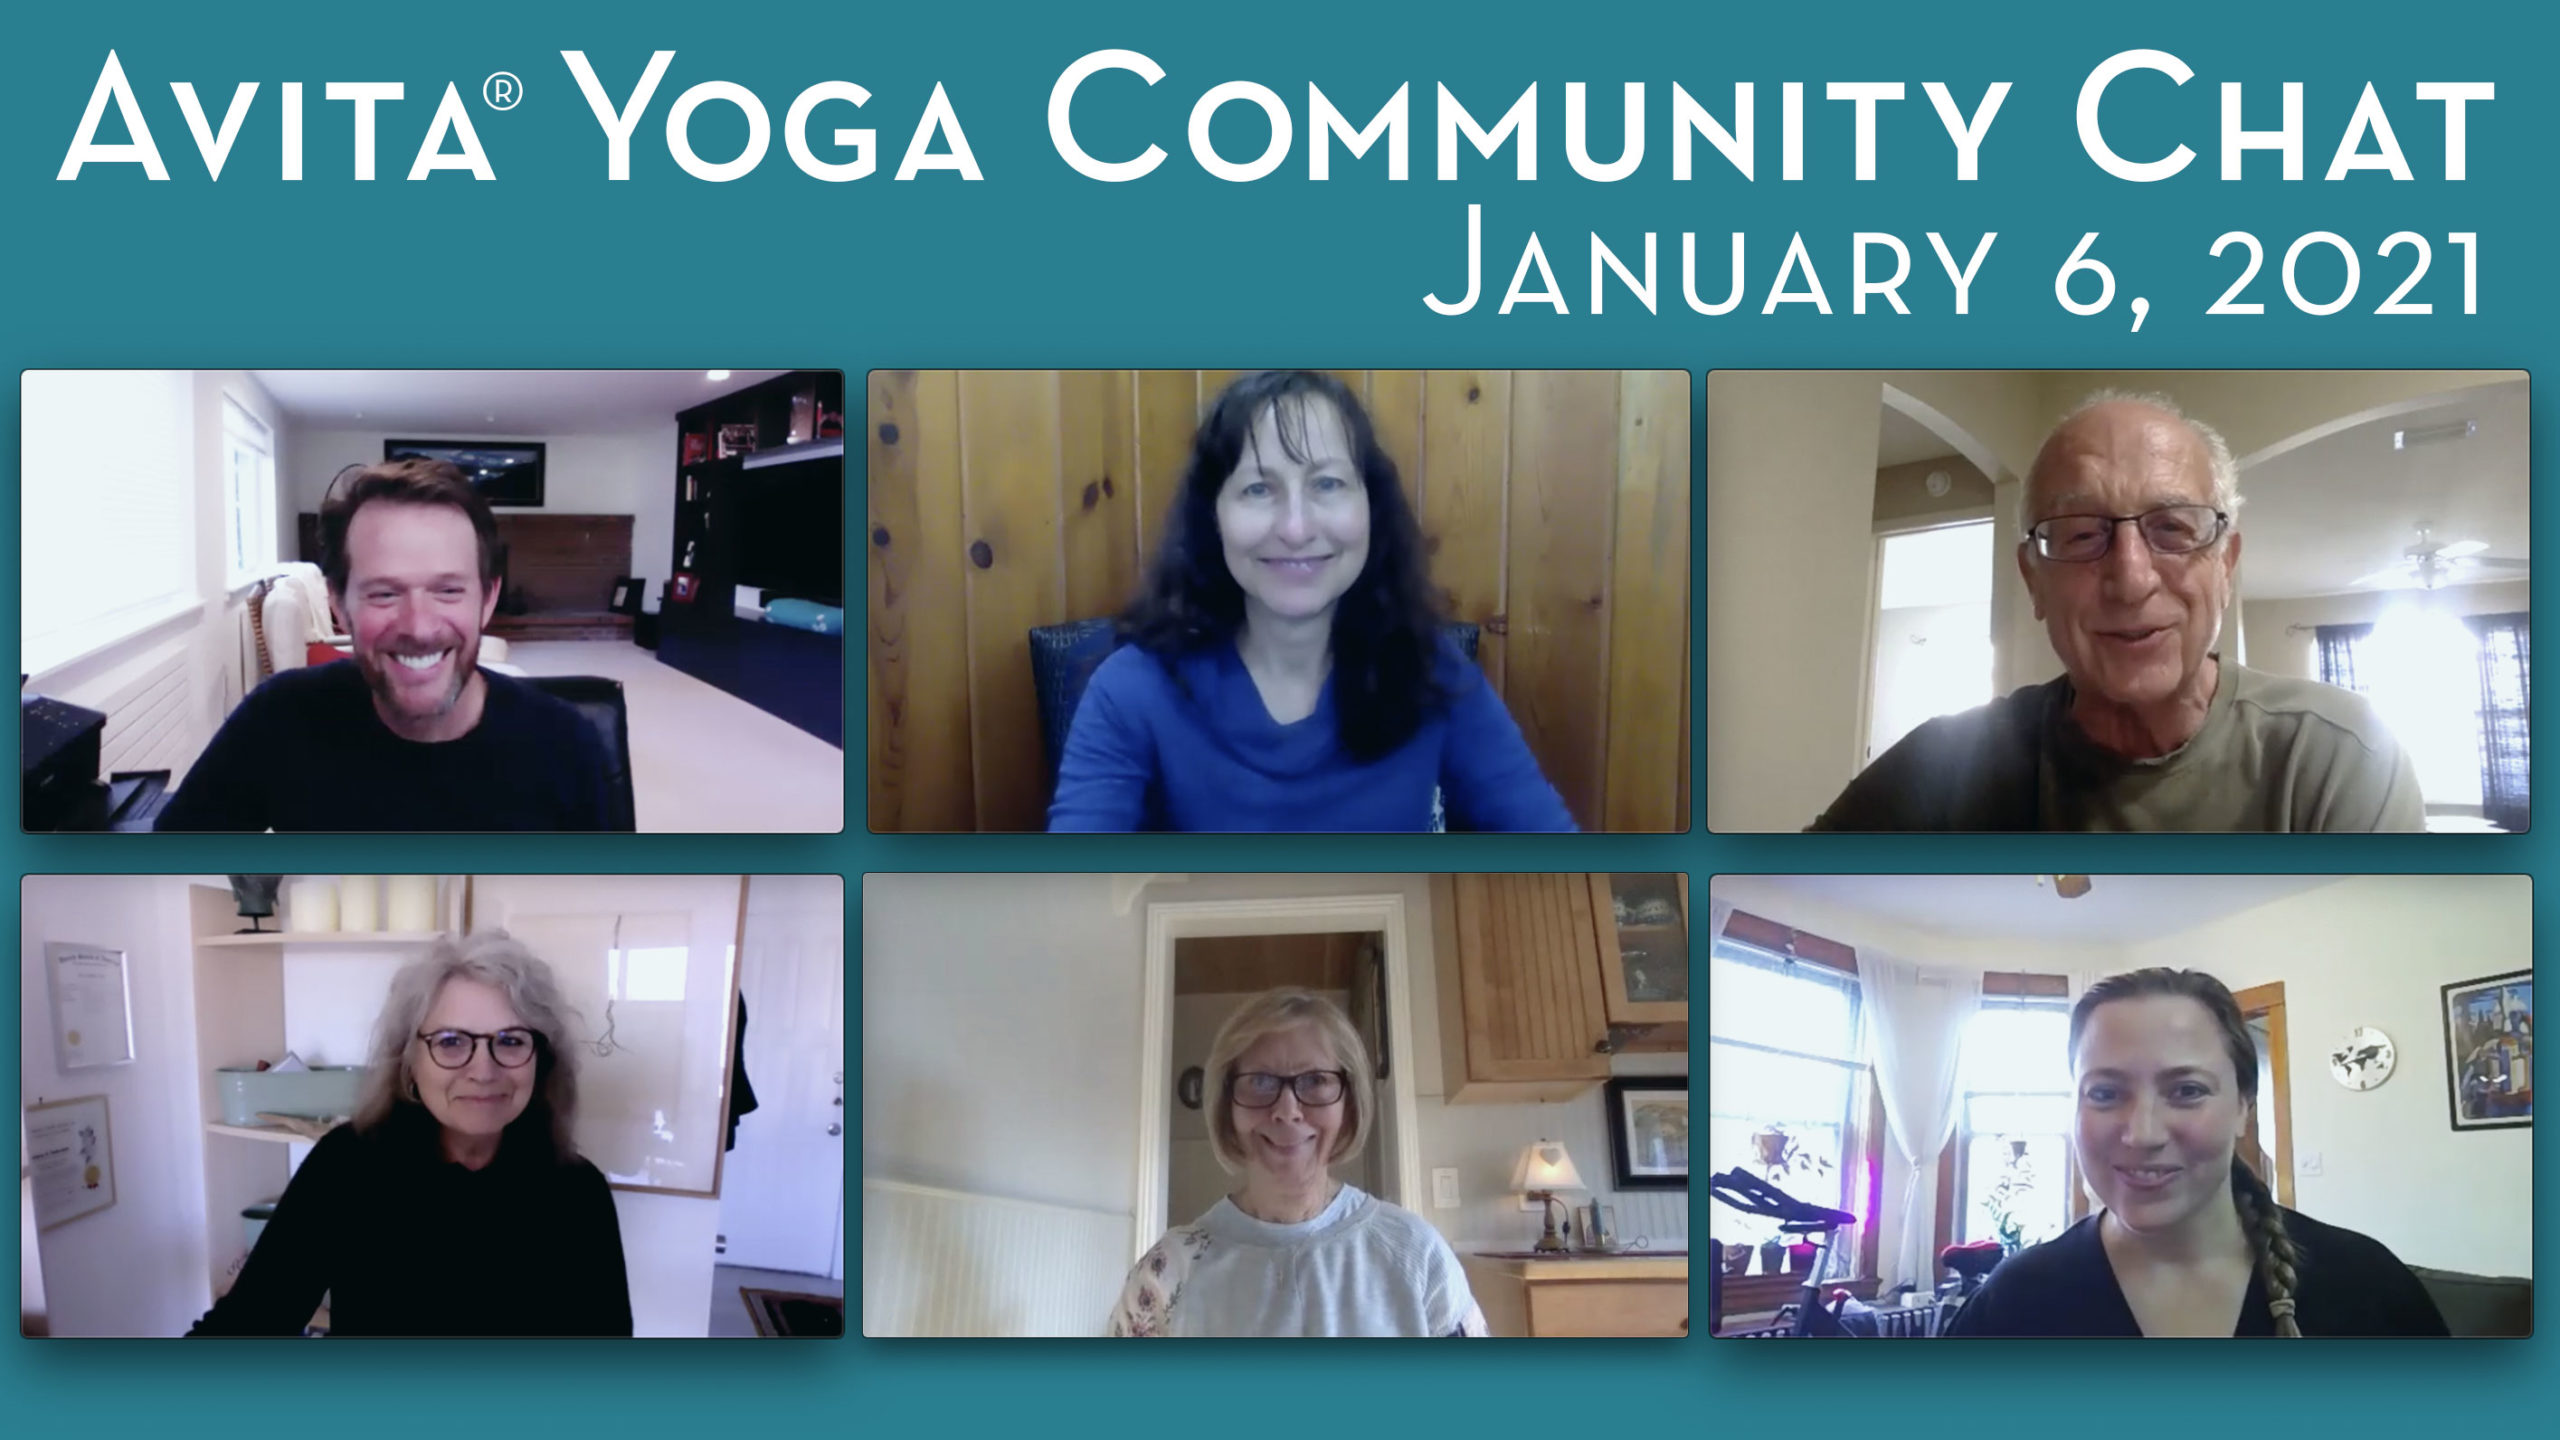 Avita® Yoga Community Chat with Jeff Bailey - January 6, 2021